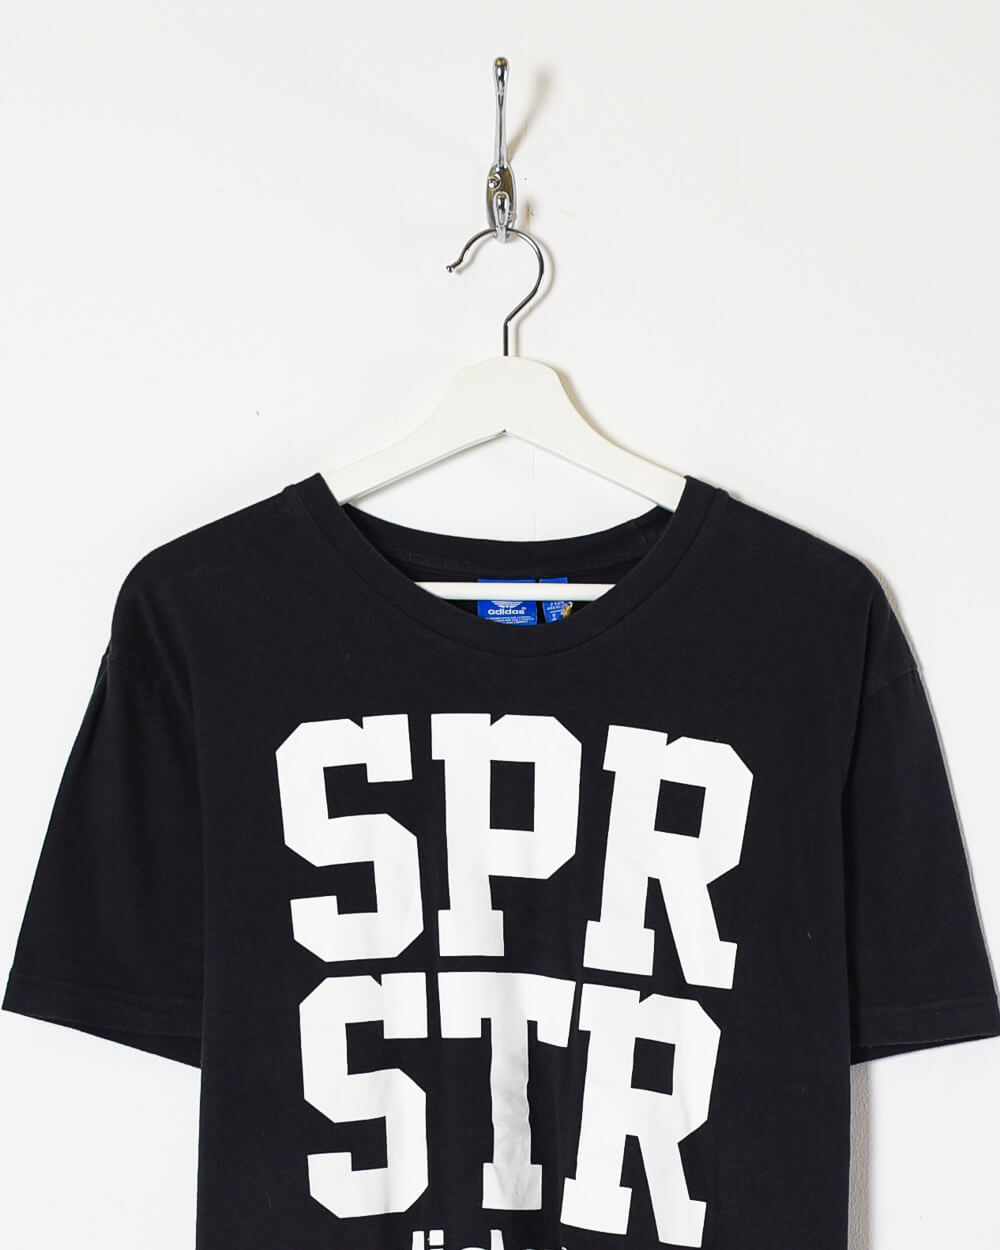 Black Adidas Spr Str T-Shirt - X-Large